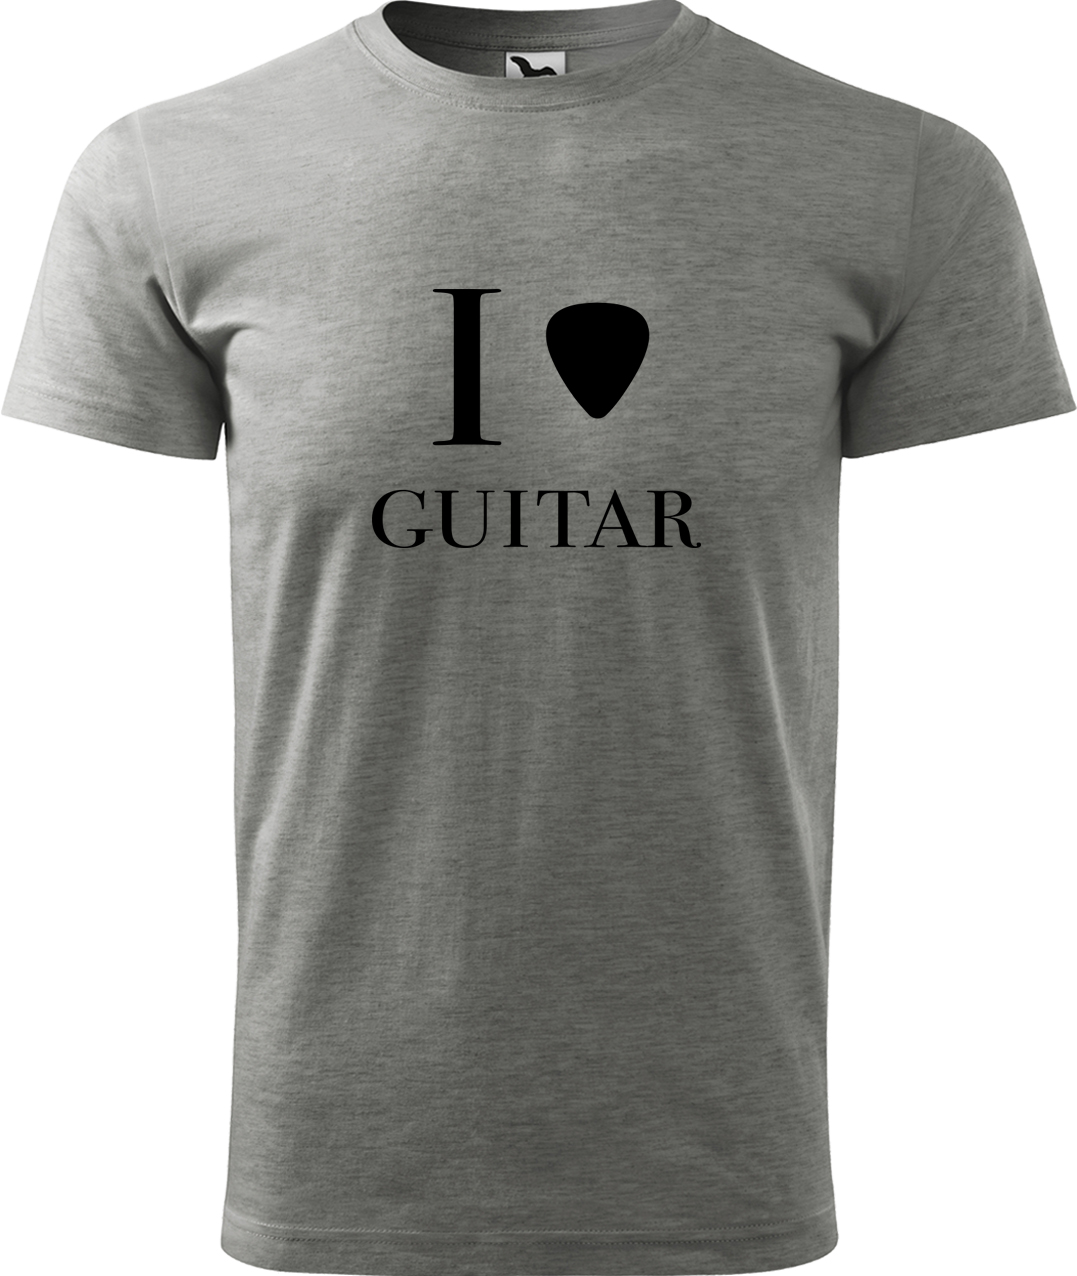 Pánské tričko s kytarou - I love guitar Velikost: L, Barva: Tmavě šedý melír (12), Střih: pánský